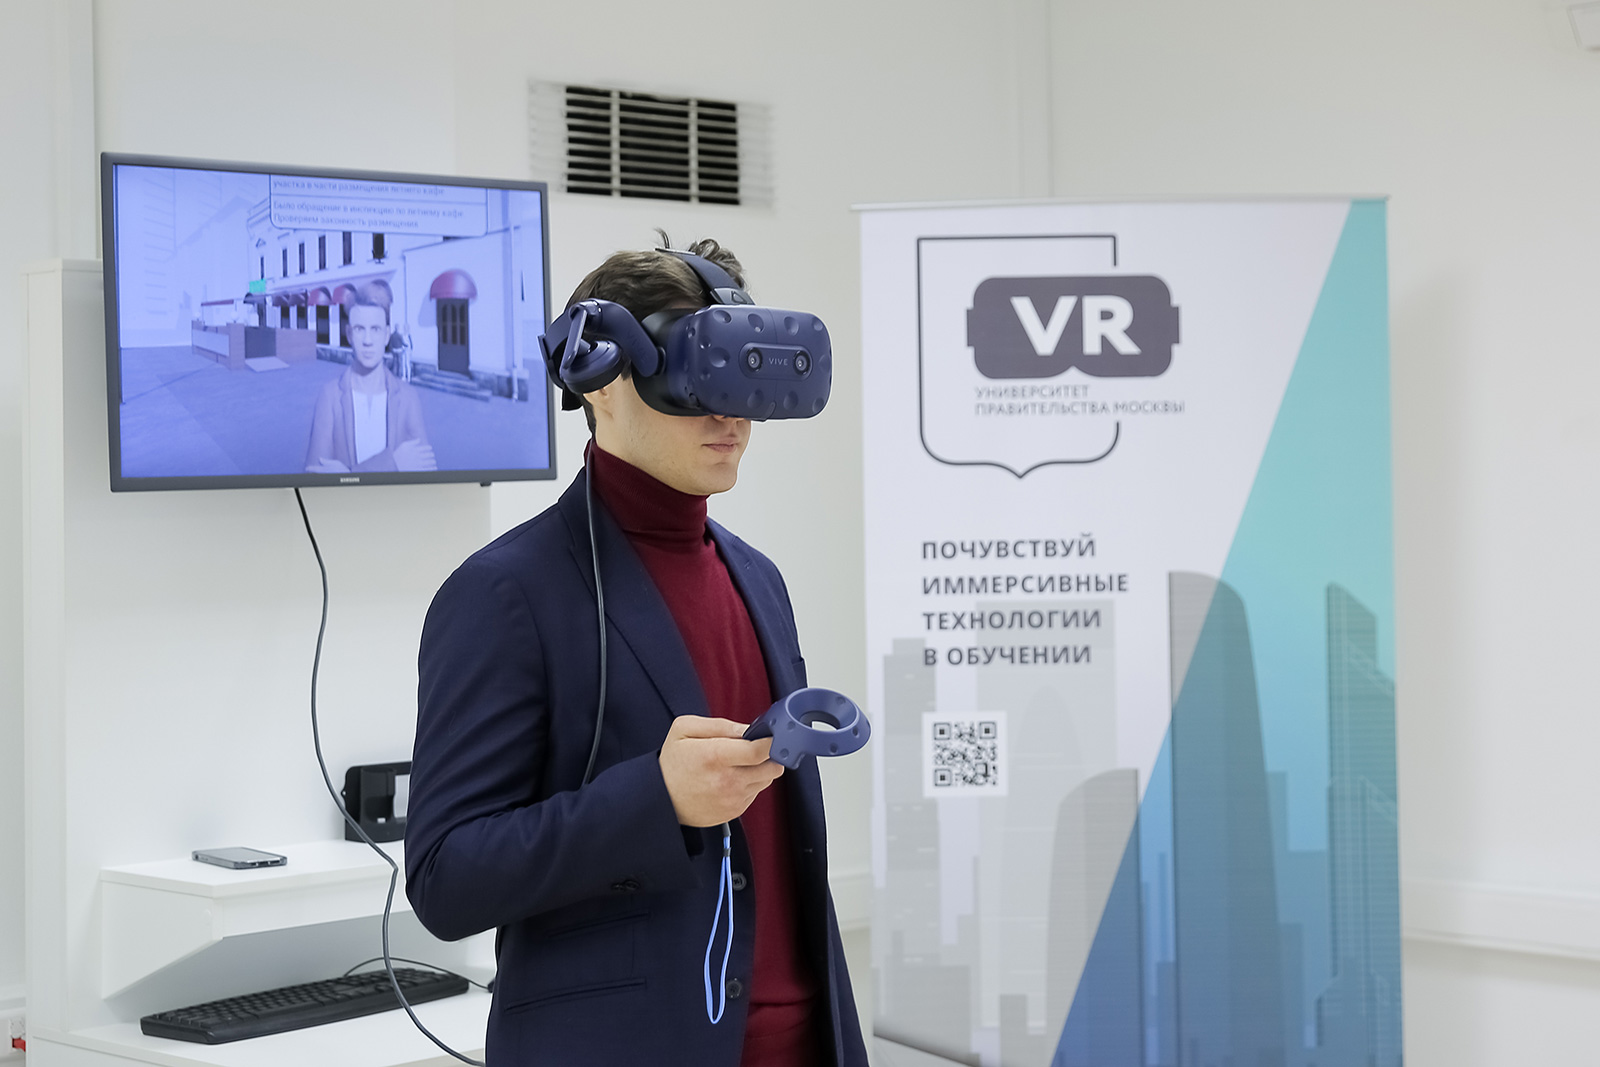 Vr classic. VR Concept. VR Concept компания. VR класс. Класс с VR технологиями.